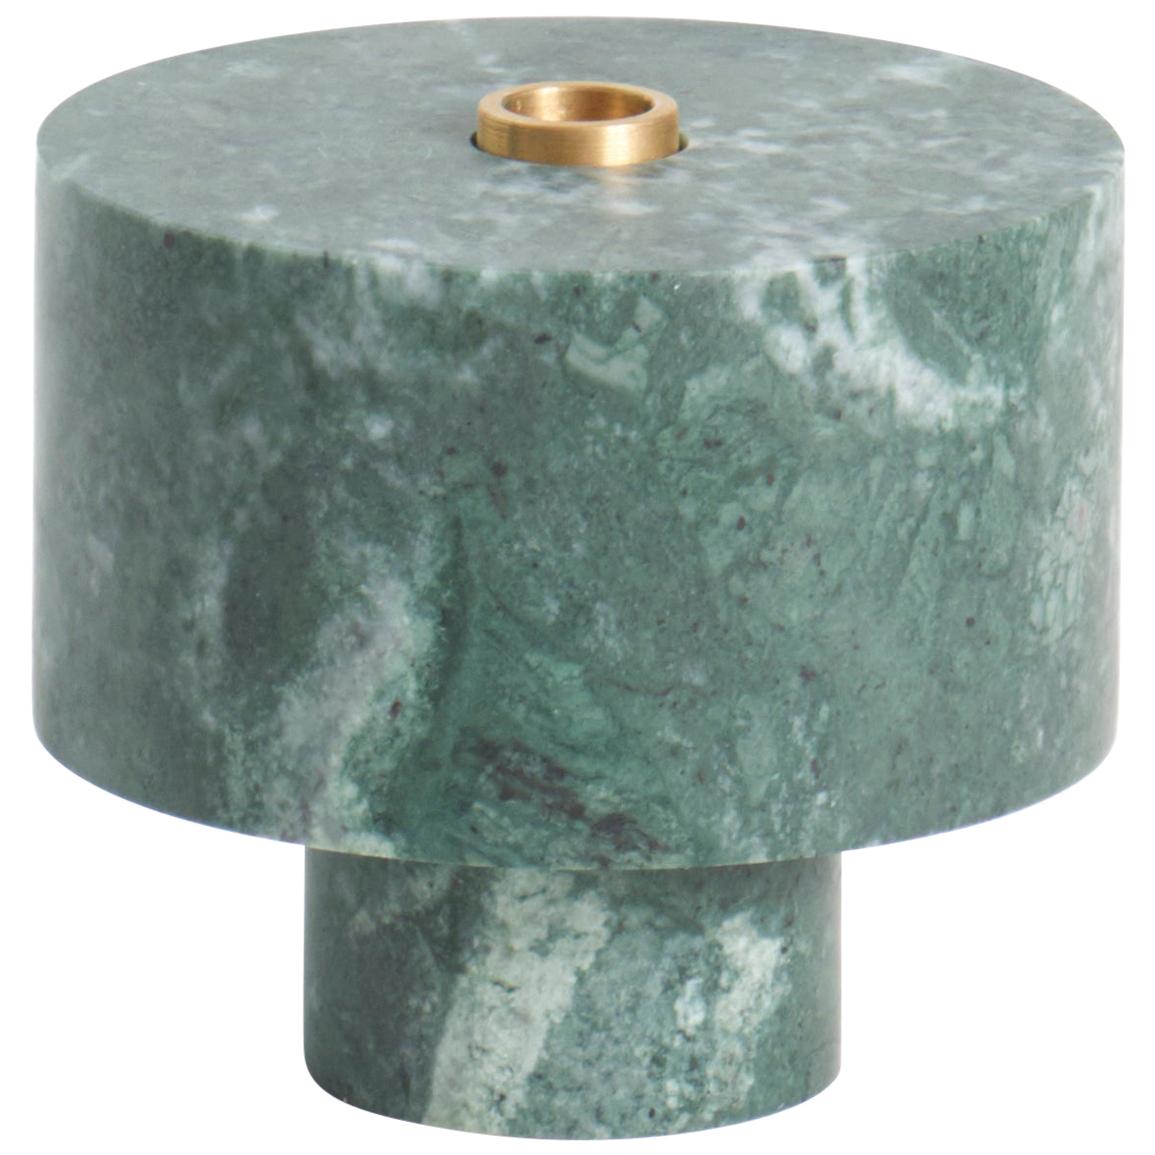 Candleholder in Green Marble, by Karen Chekerdjian, Made in Italy